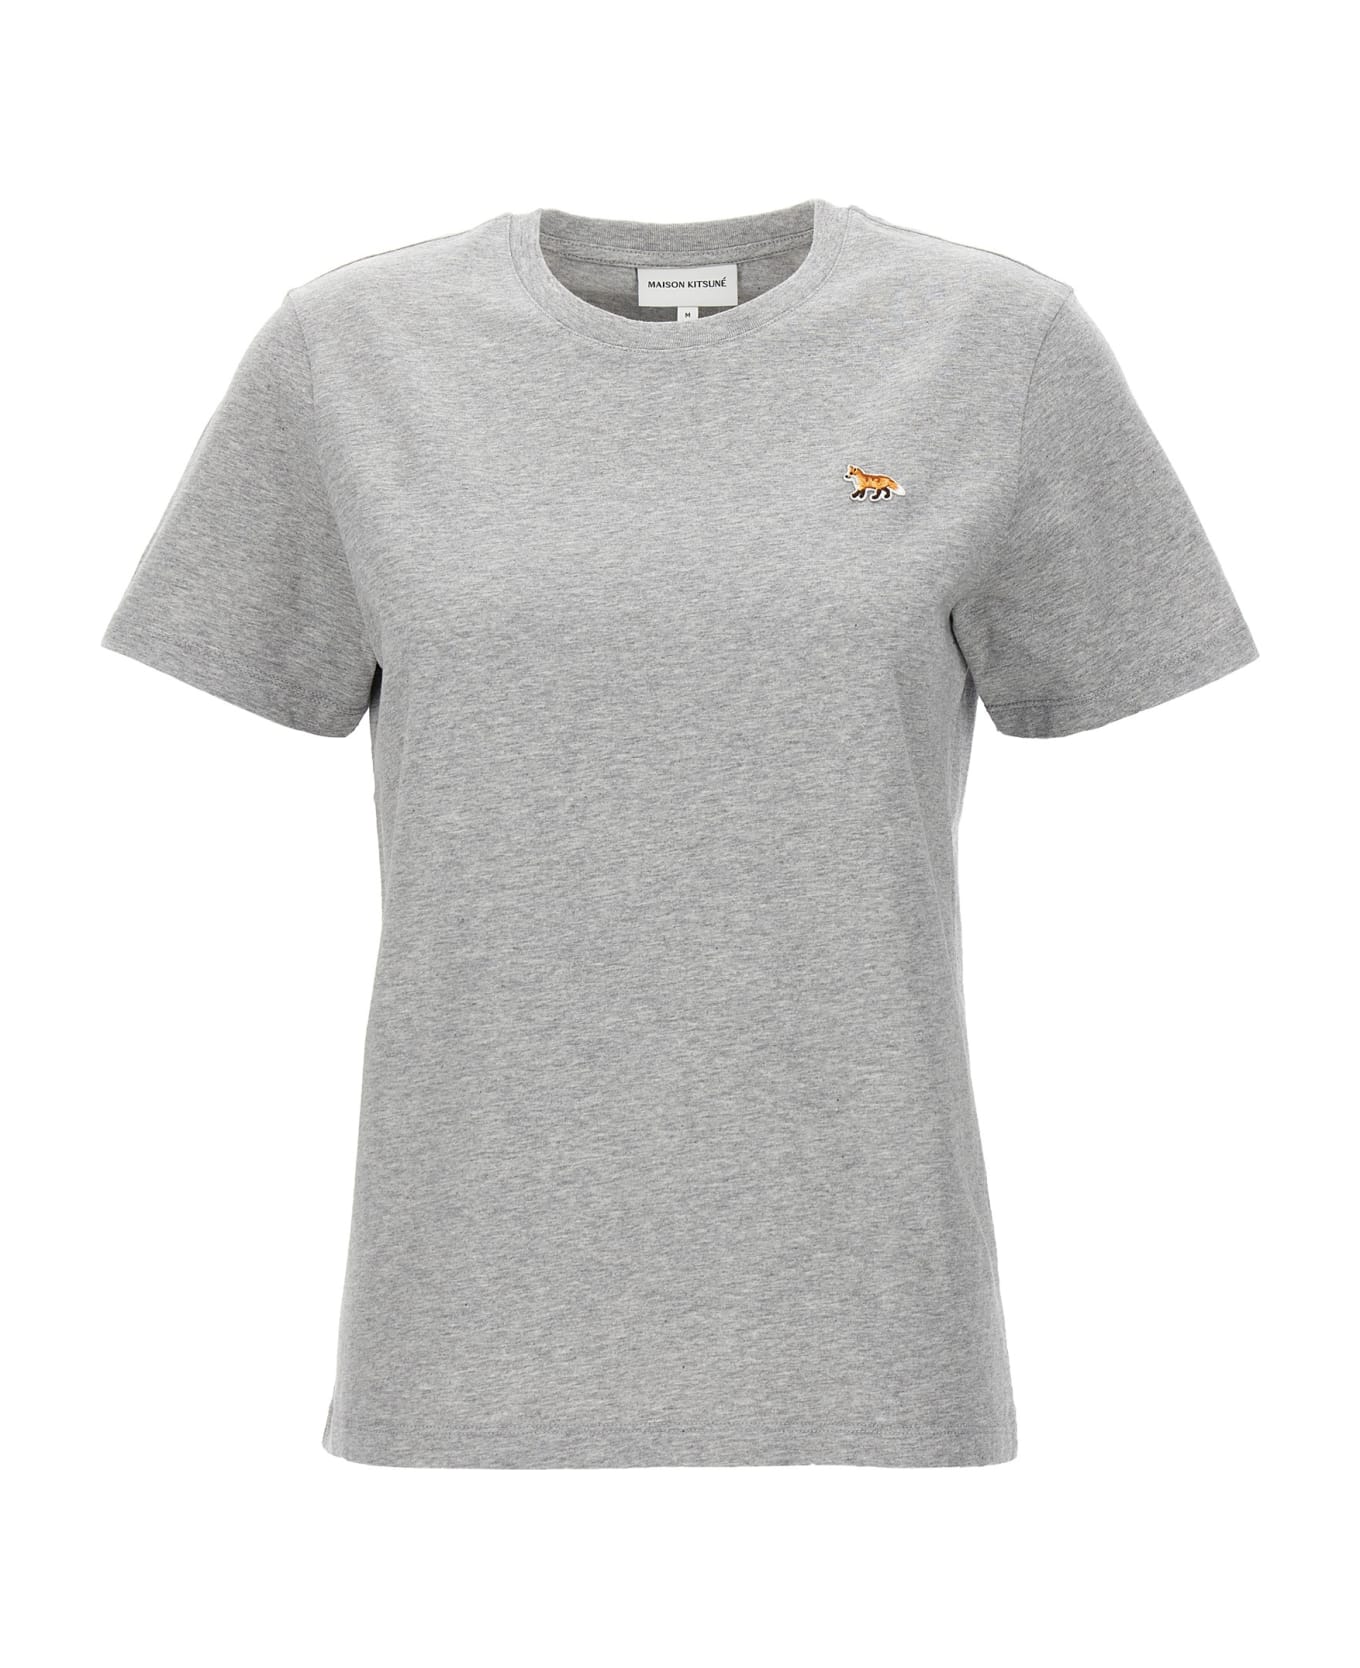 Maison Kitsuné 'baby Fox' T-shirt - Gray Tシャツ